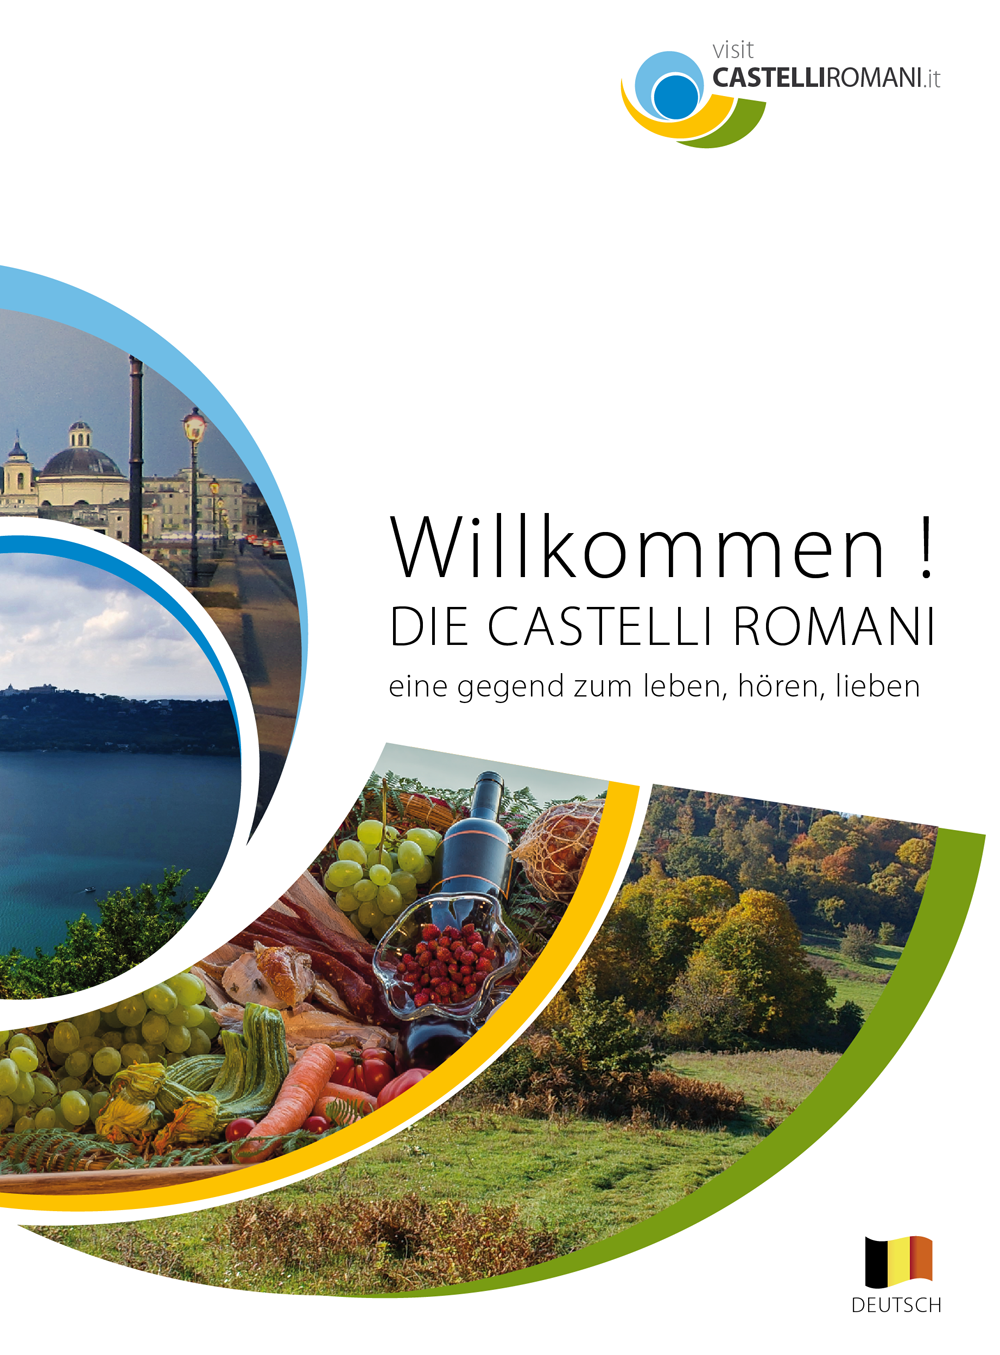 I Castelli Romani in mostra a Berlino presso l'ITB Berlin Travel fair